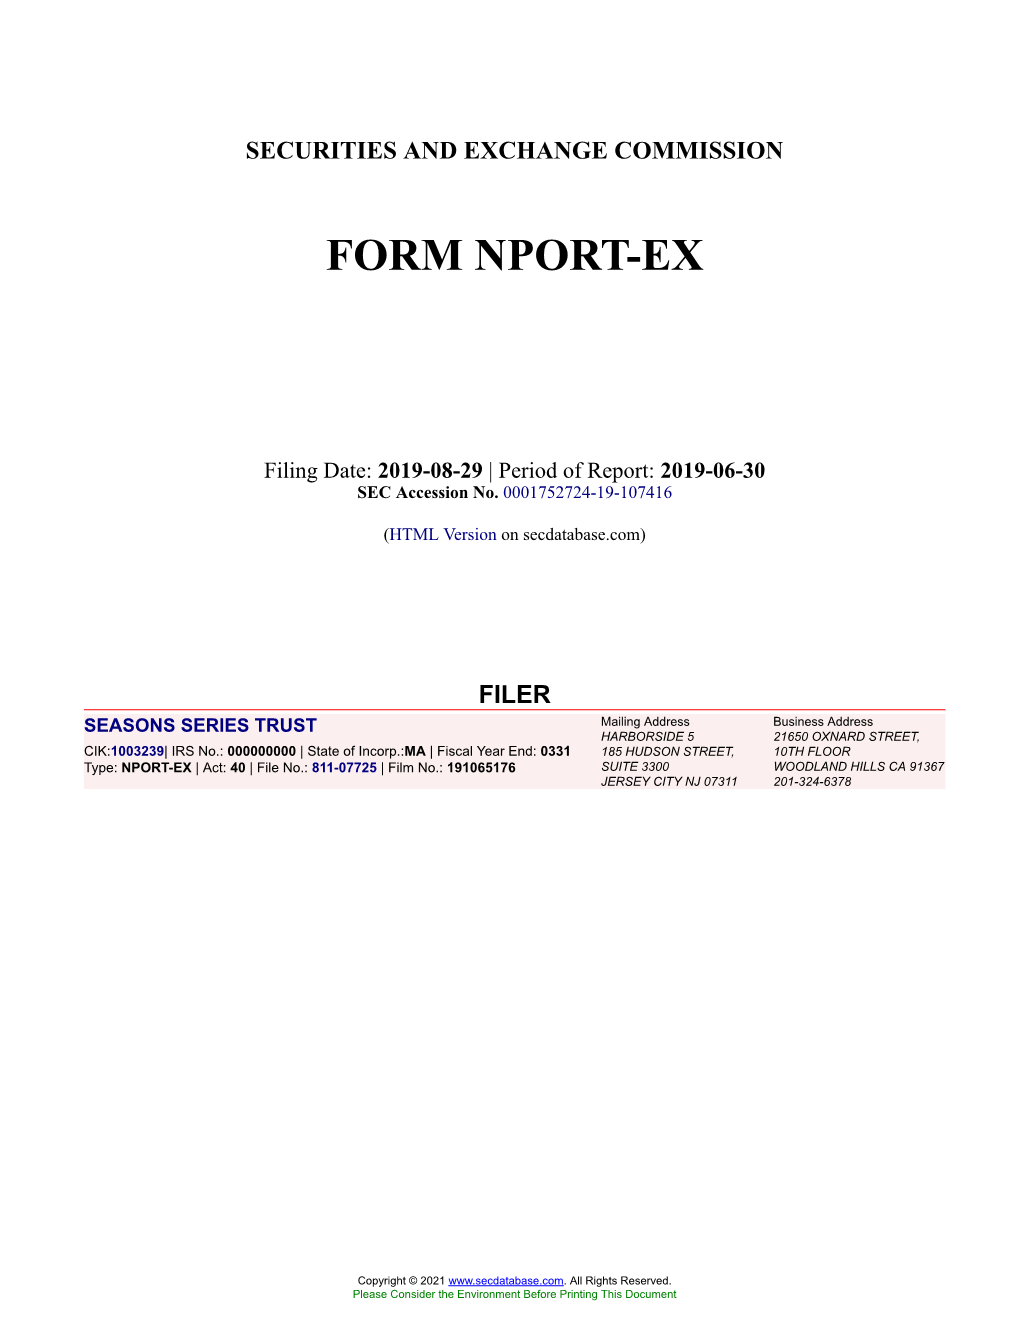 SEASONS SERIES TRUST Form NPORT-EX Filed 2019-08-29